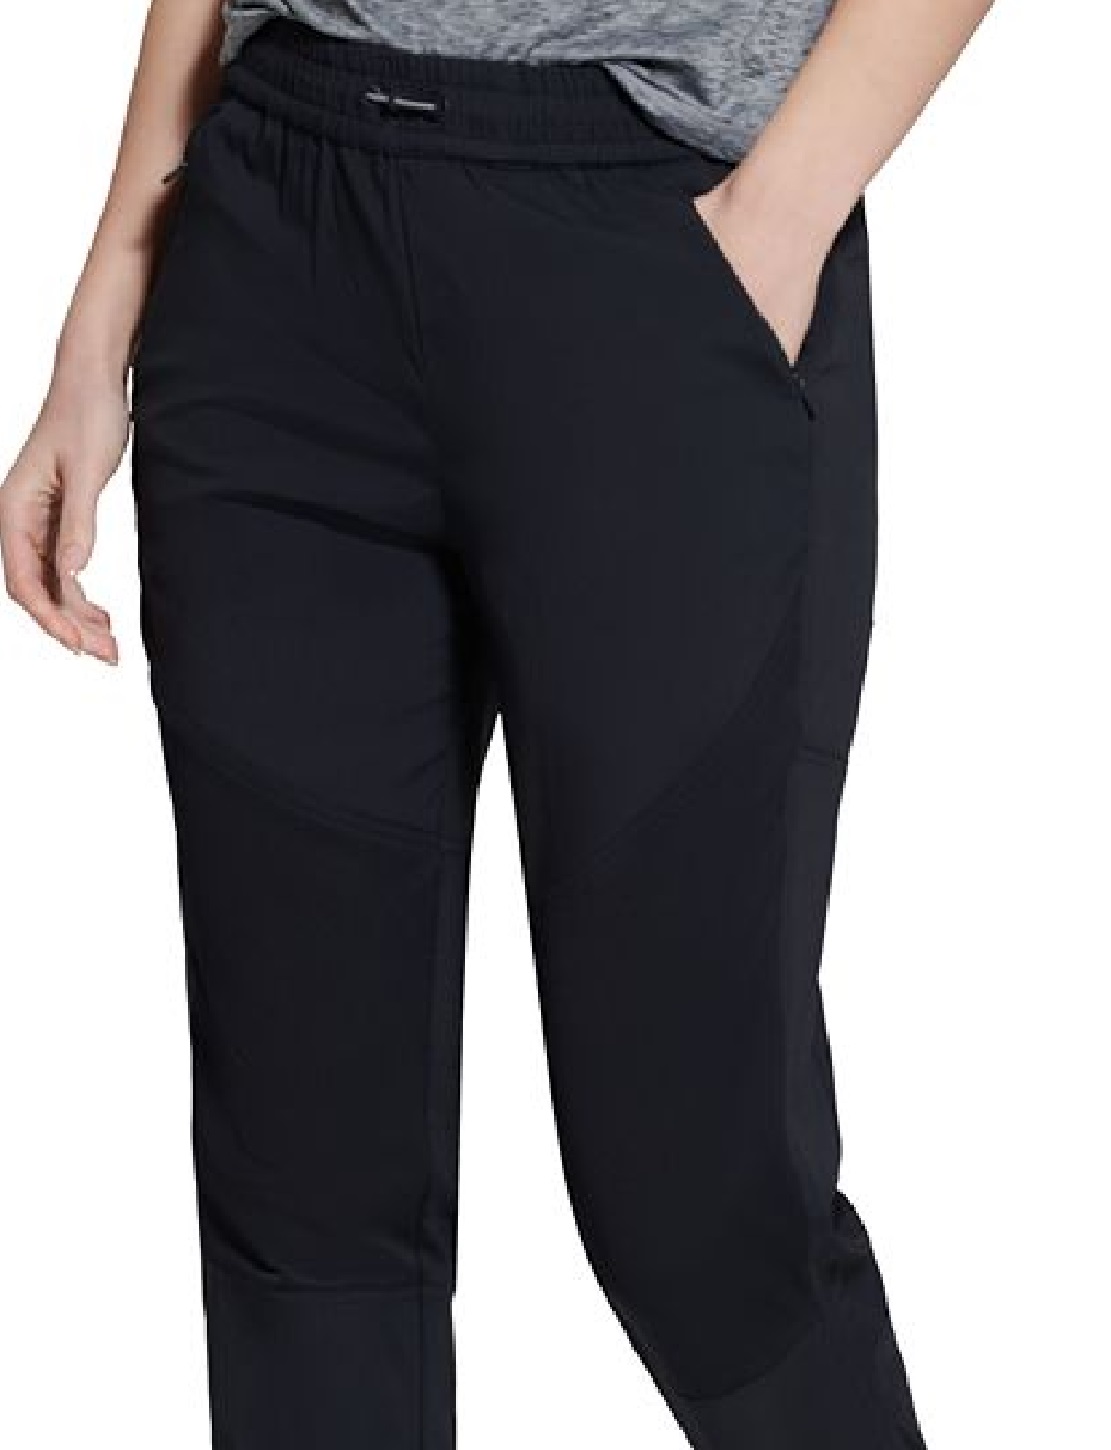 Bass Outdoor Women's Roque Pants Black Size Medium